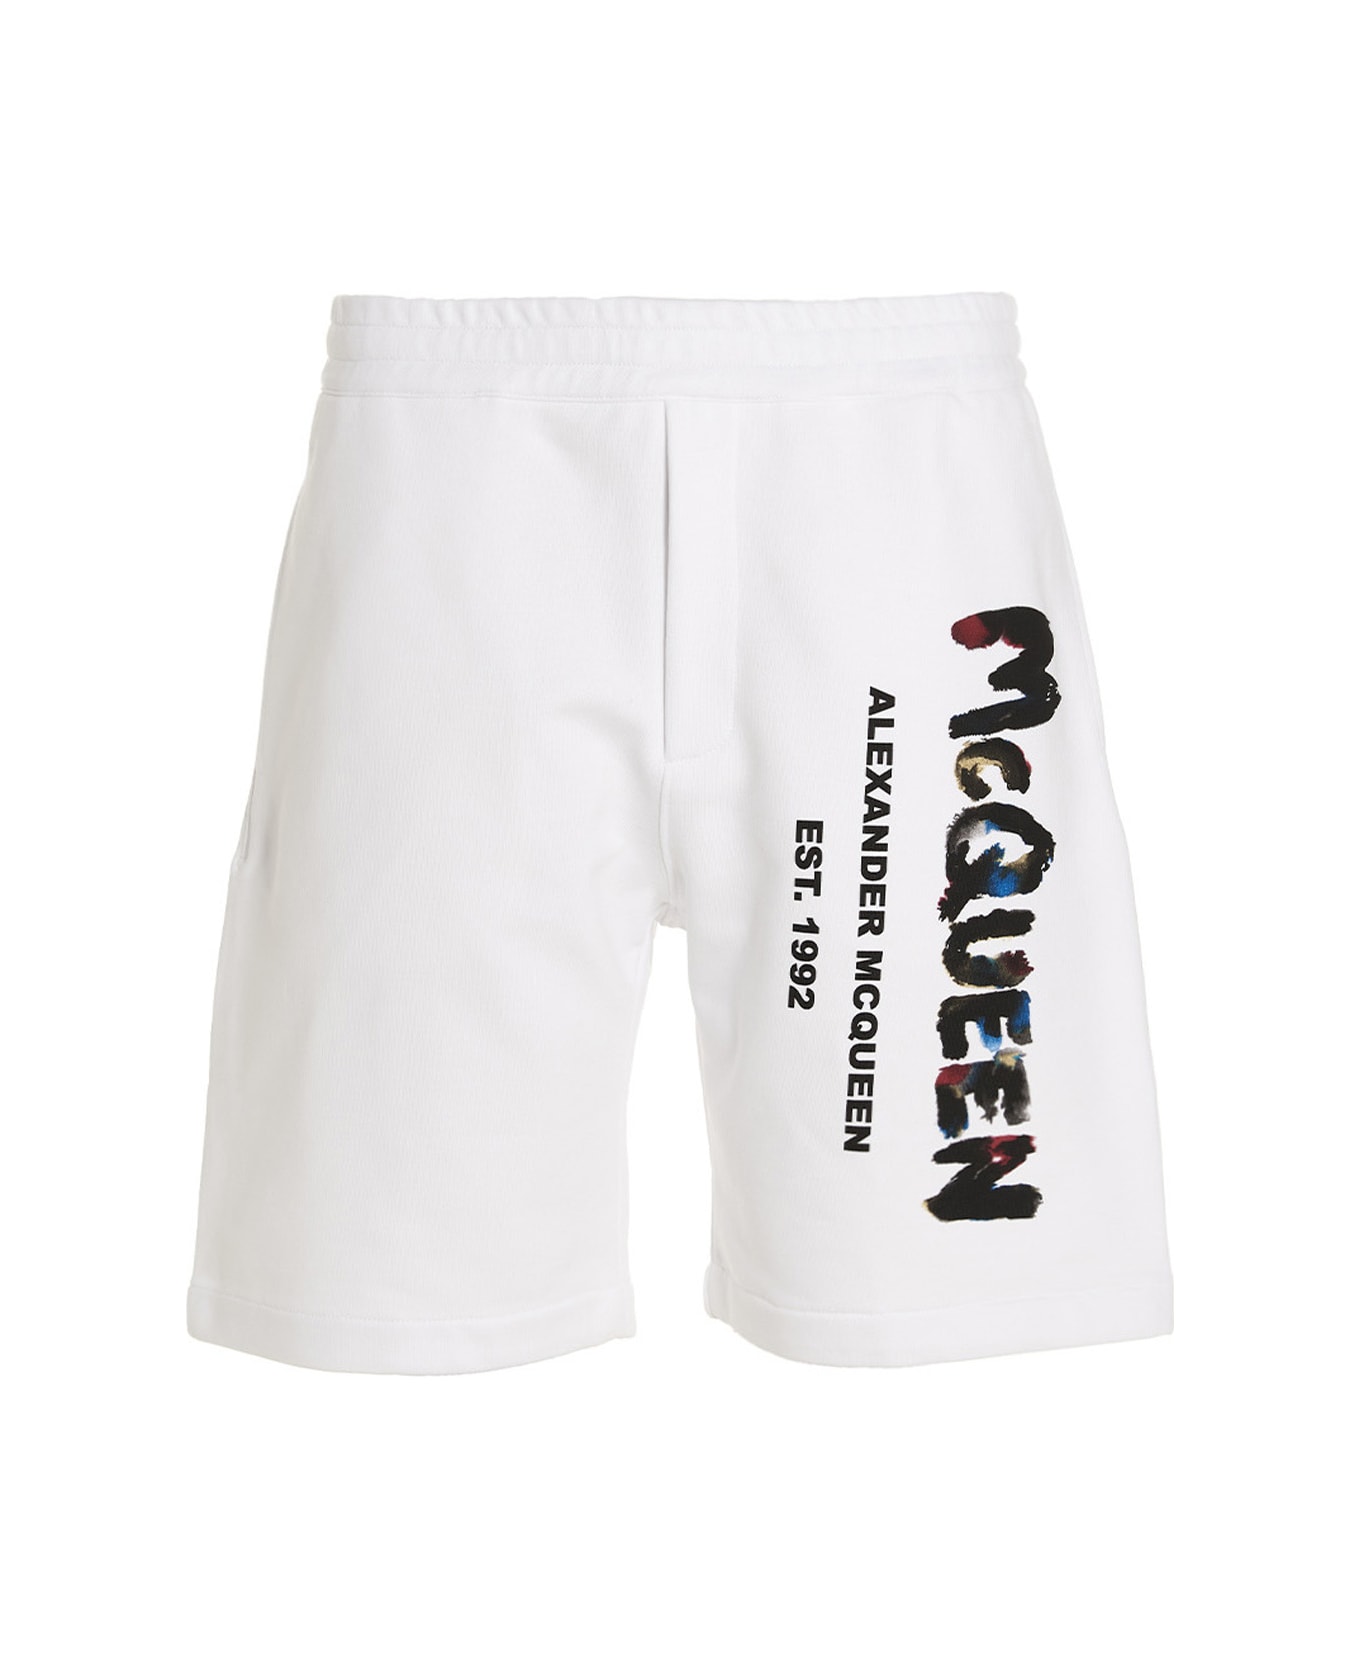 Alexander McQueen Logo Print Shorts - White/Black